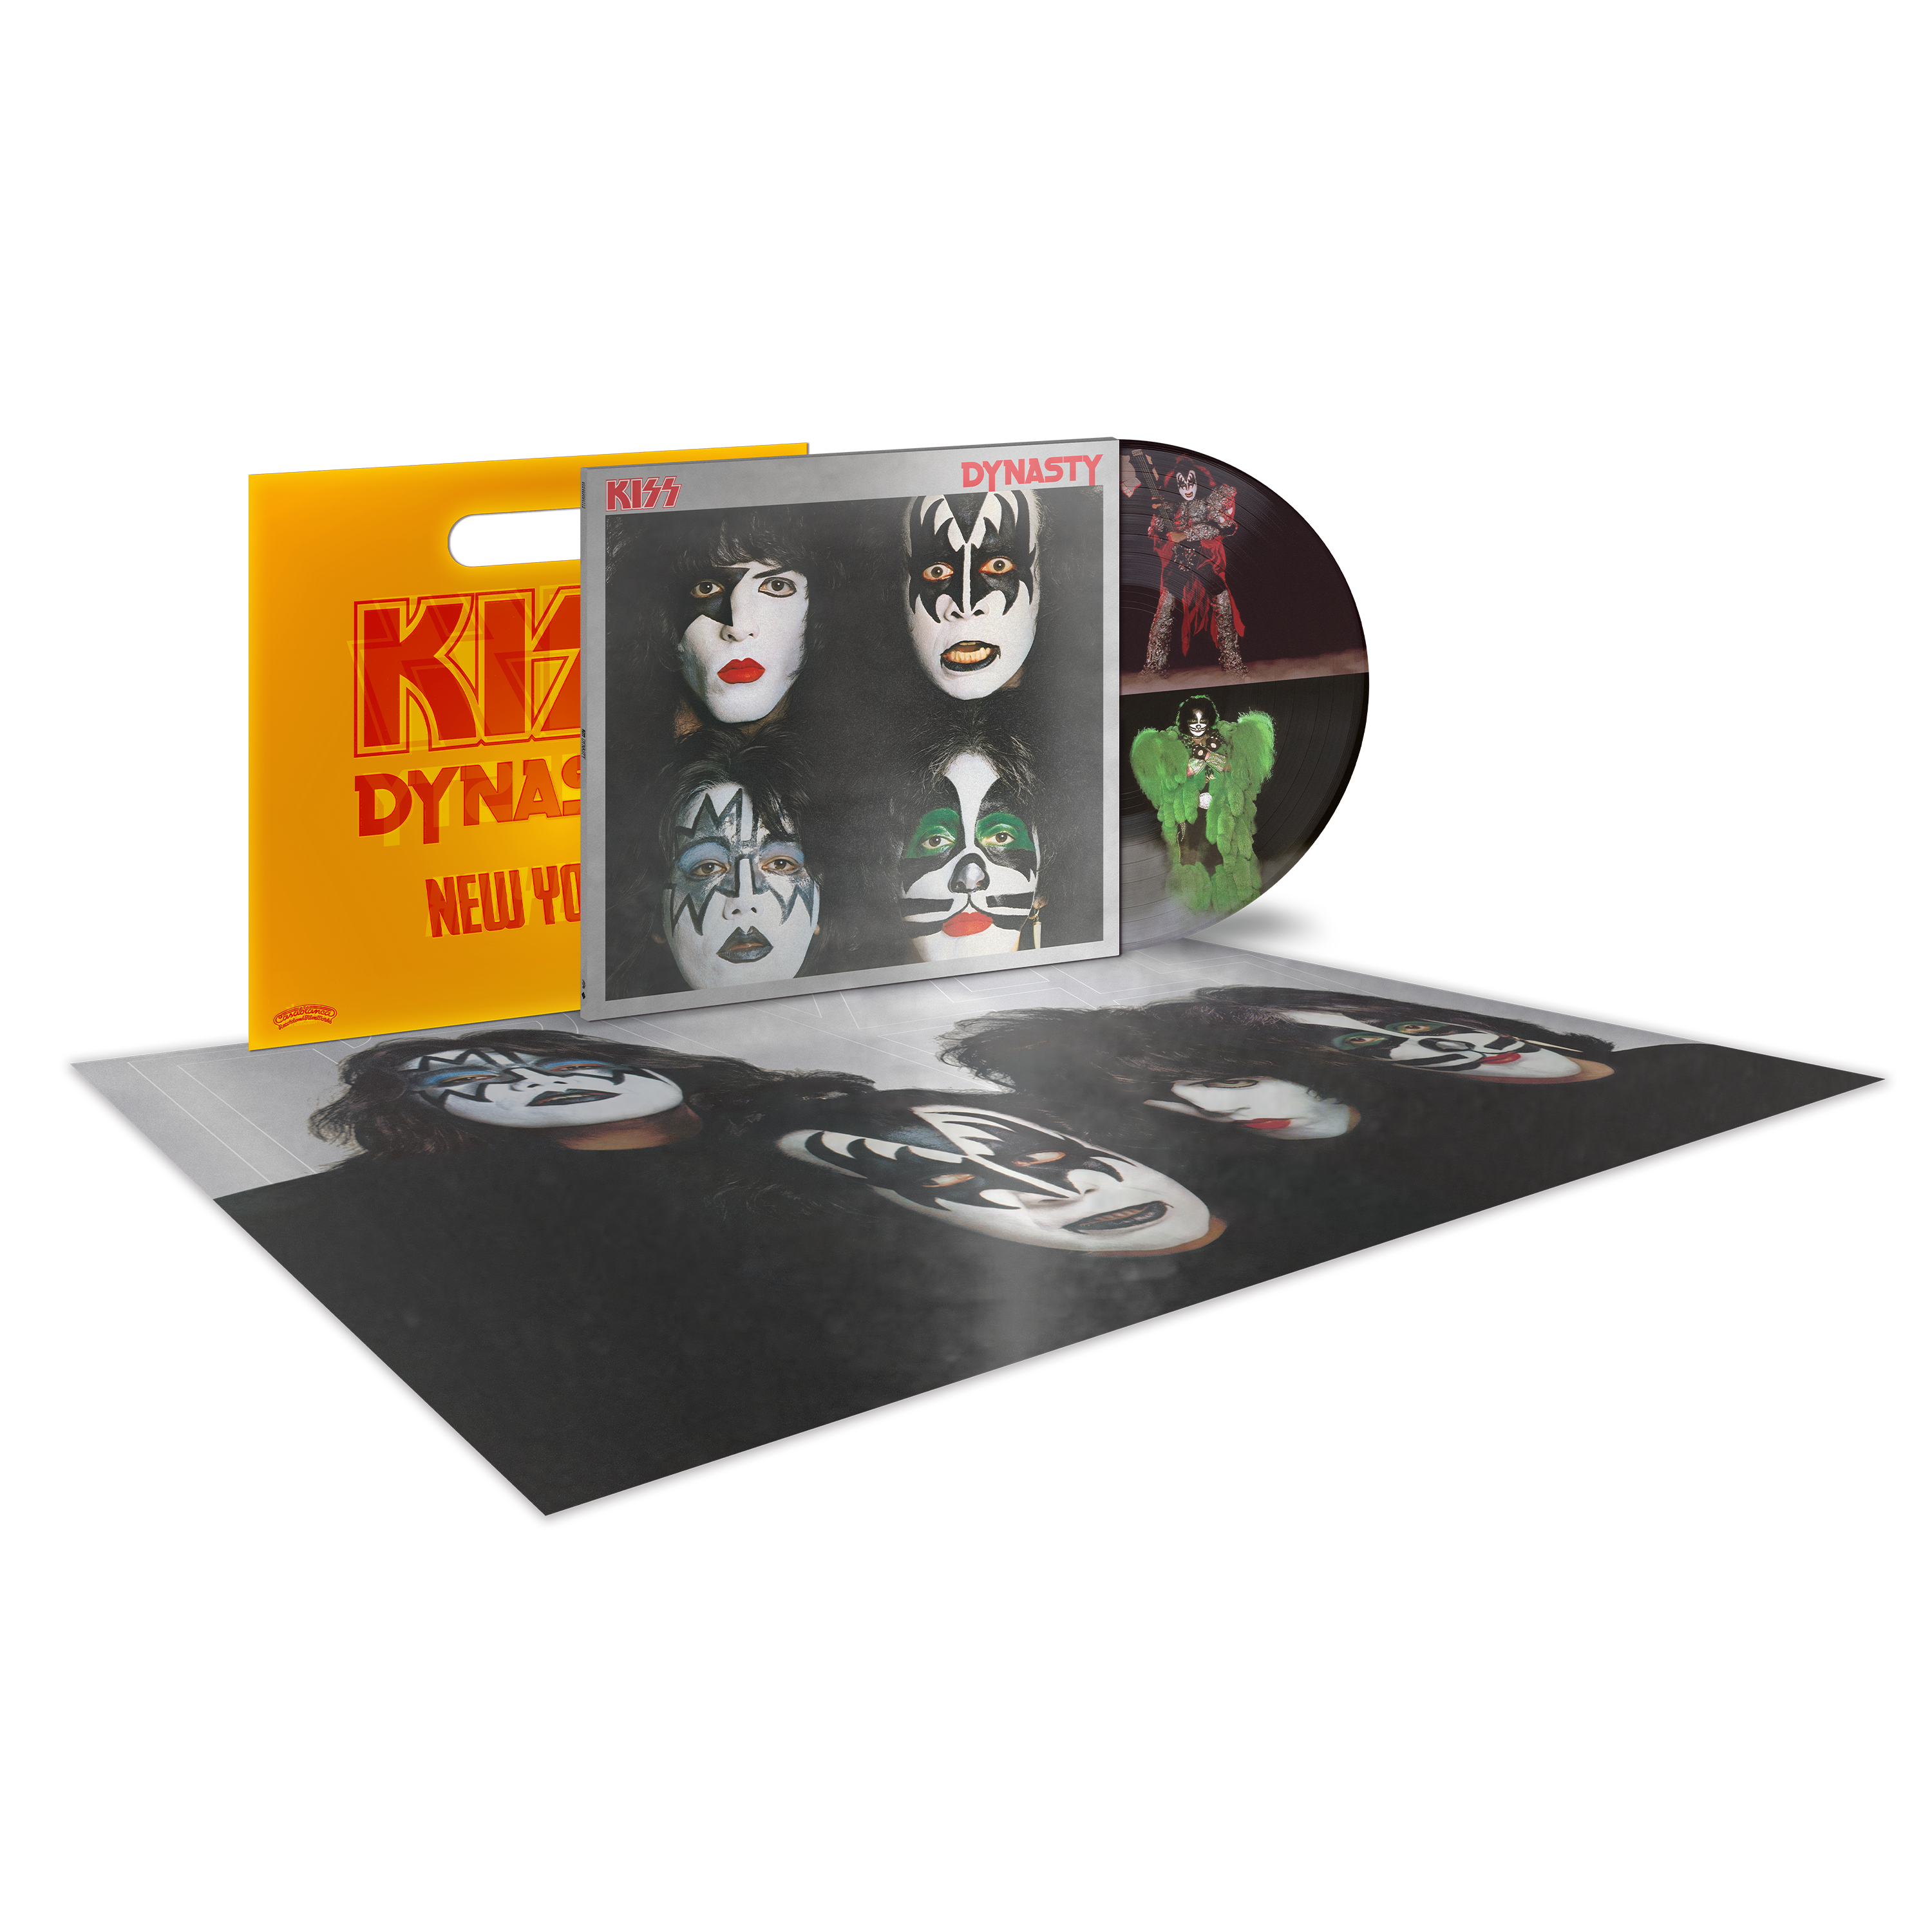 Kiss - Dynasty Store Exclusive Picture Disc Vinyl LP